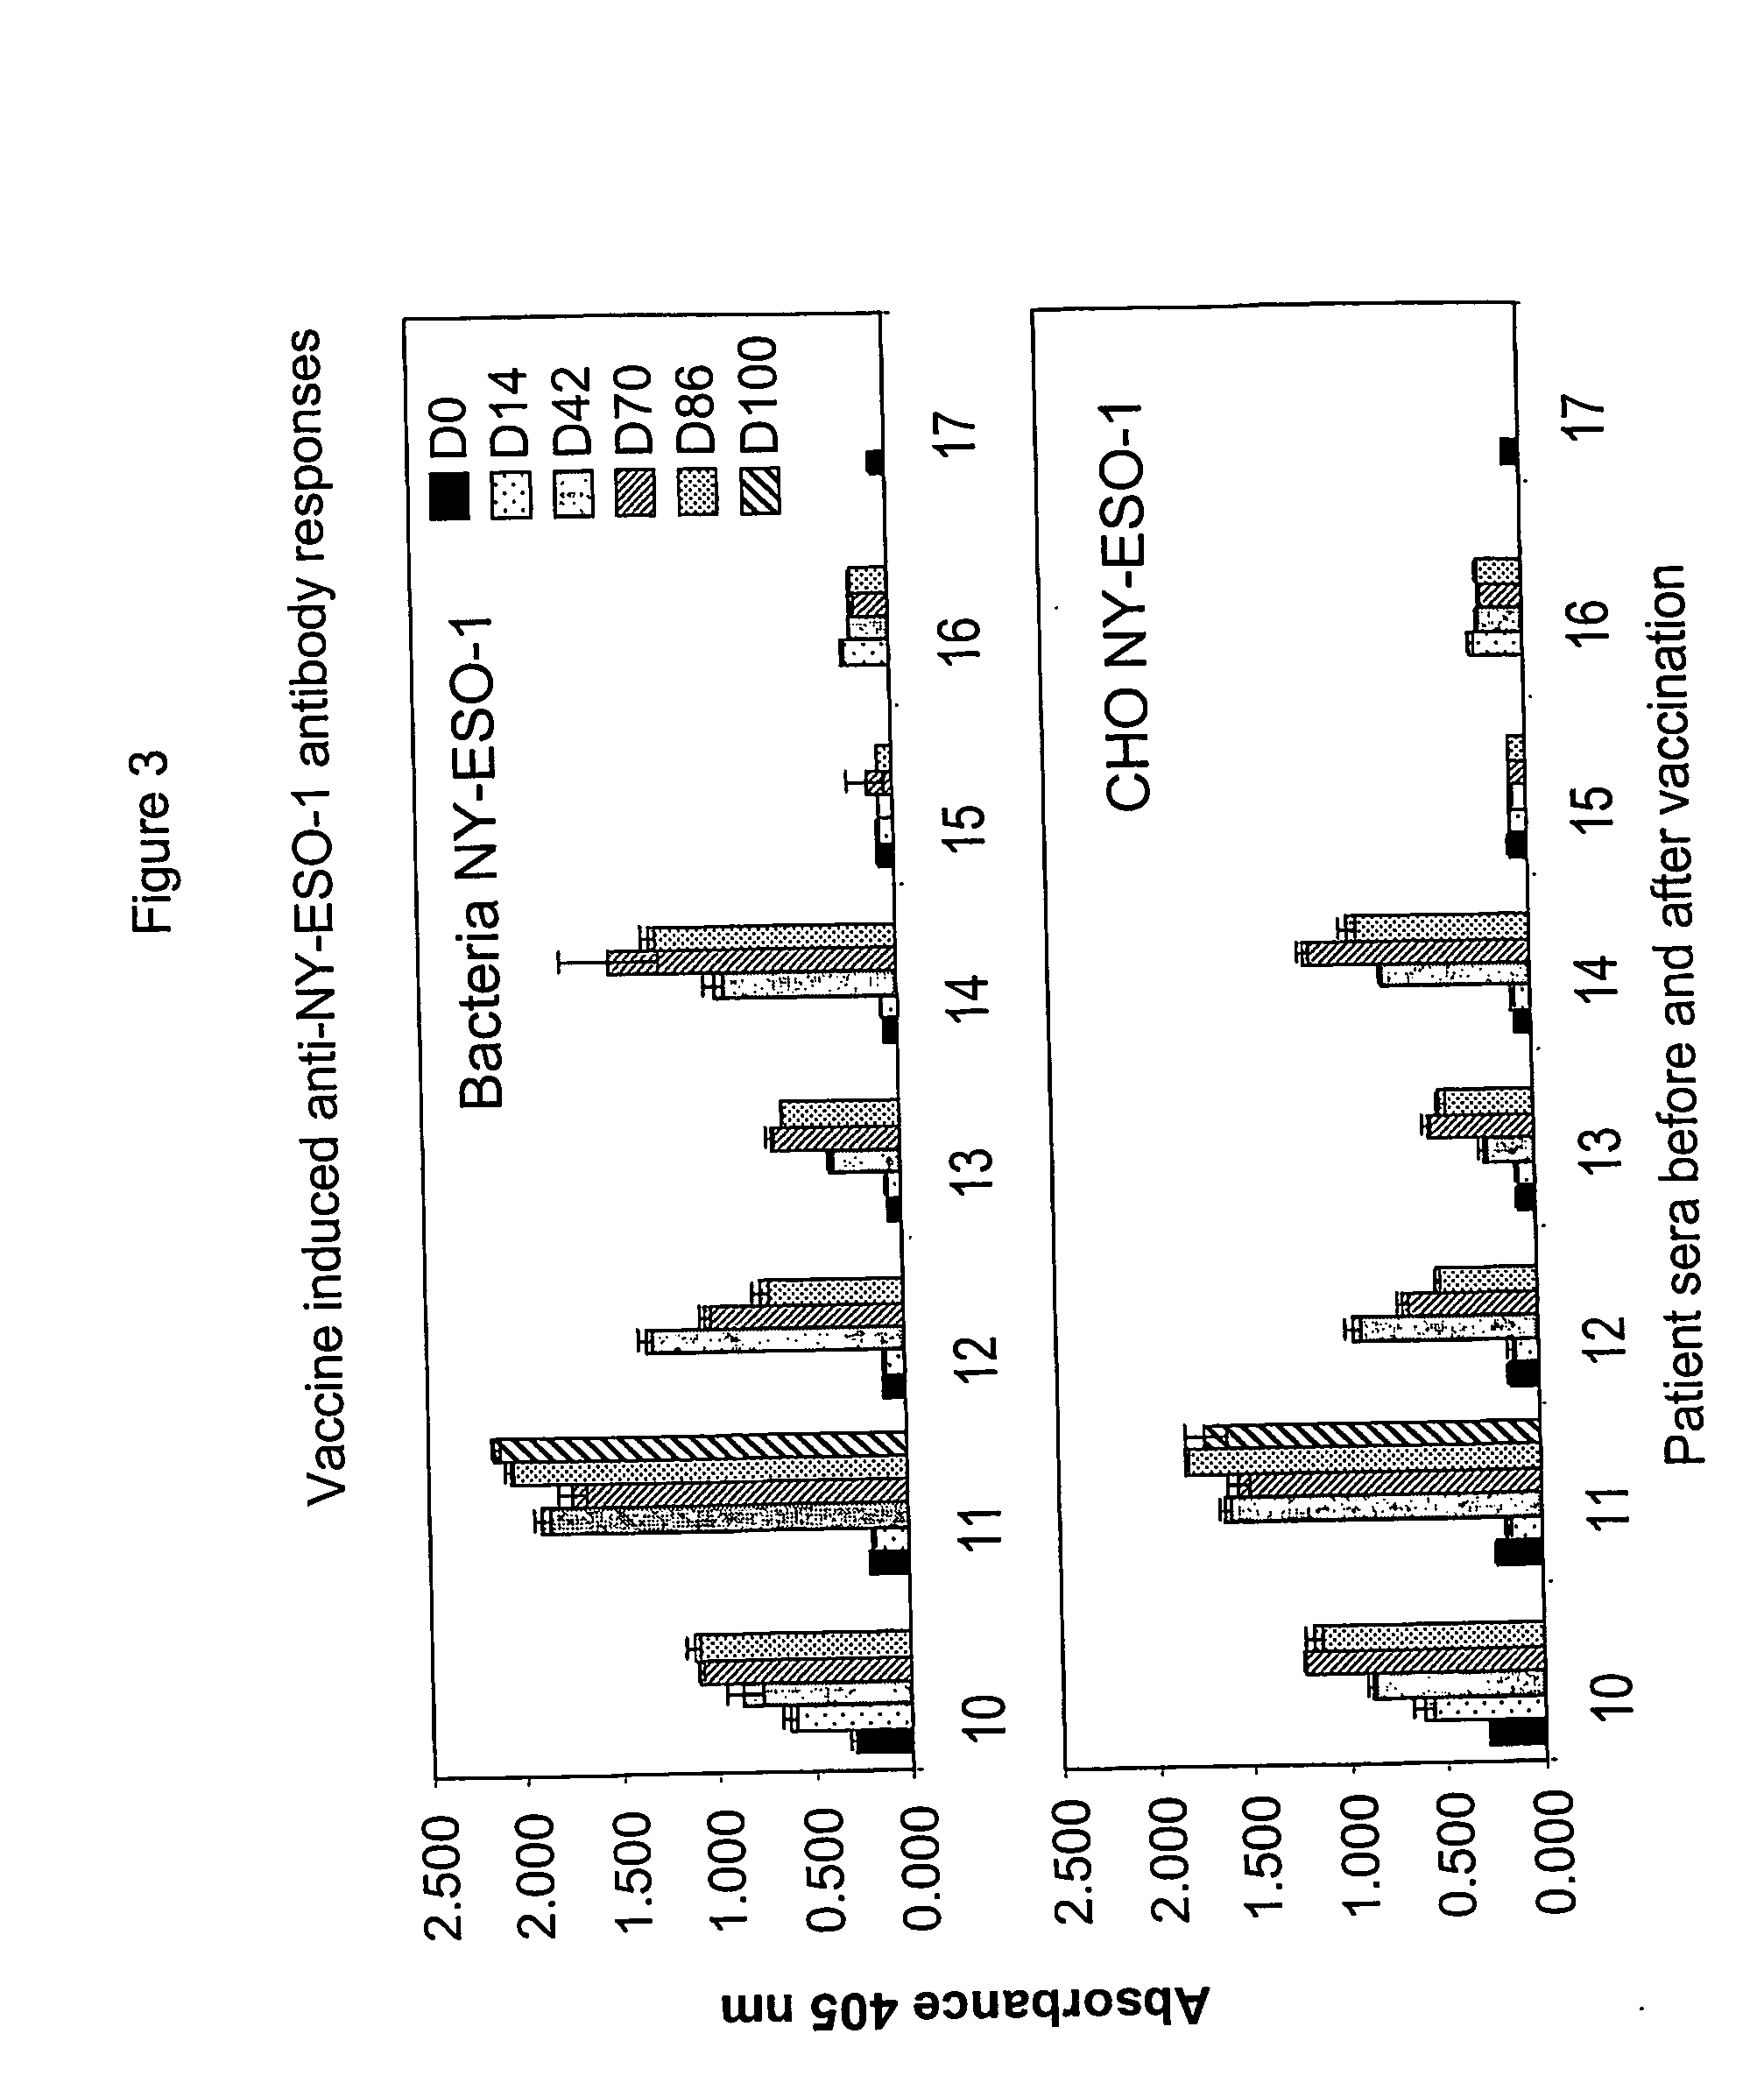 In vivo efficacy of ny-eso-1 plus adjuvant